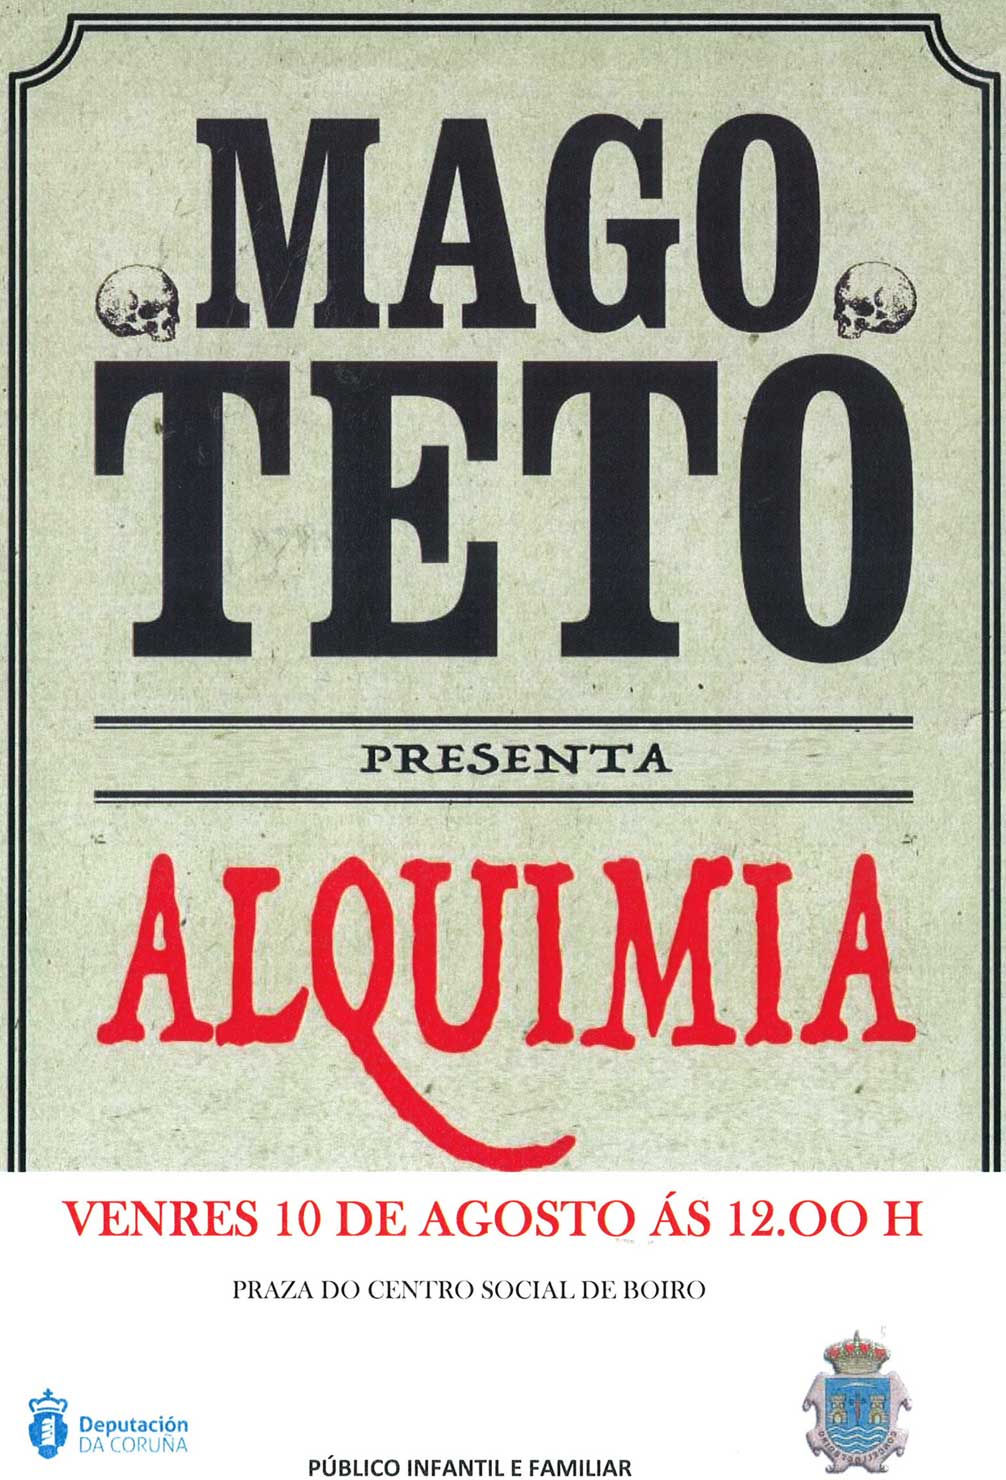 Mago Treatro presenta: Alquimia